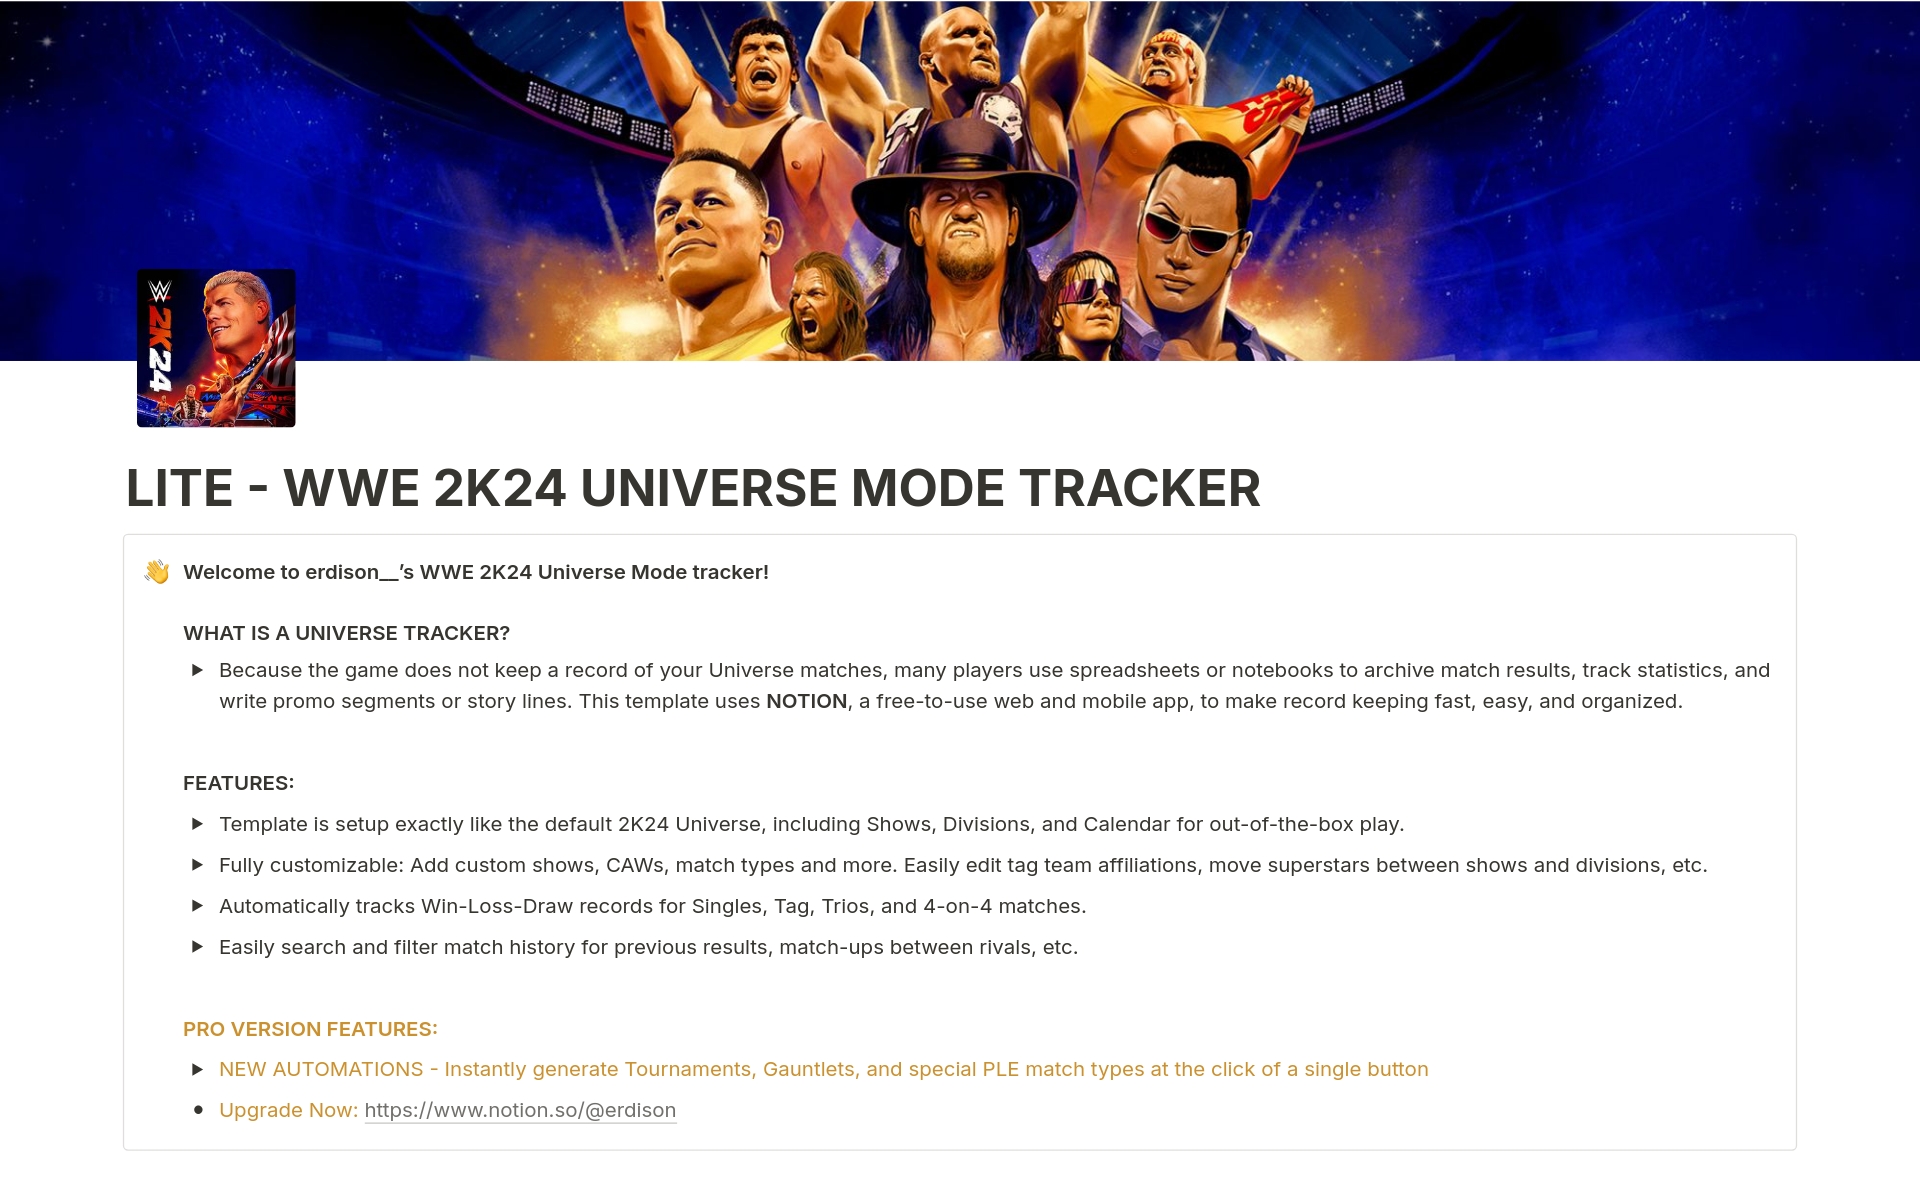 Aperçu du modèle de LITE - WWE 2K24 Universe Mode Tracker